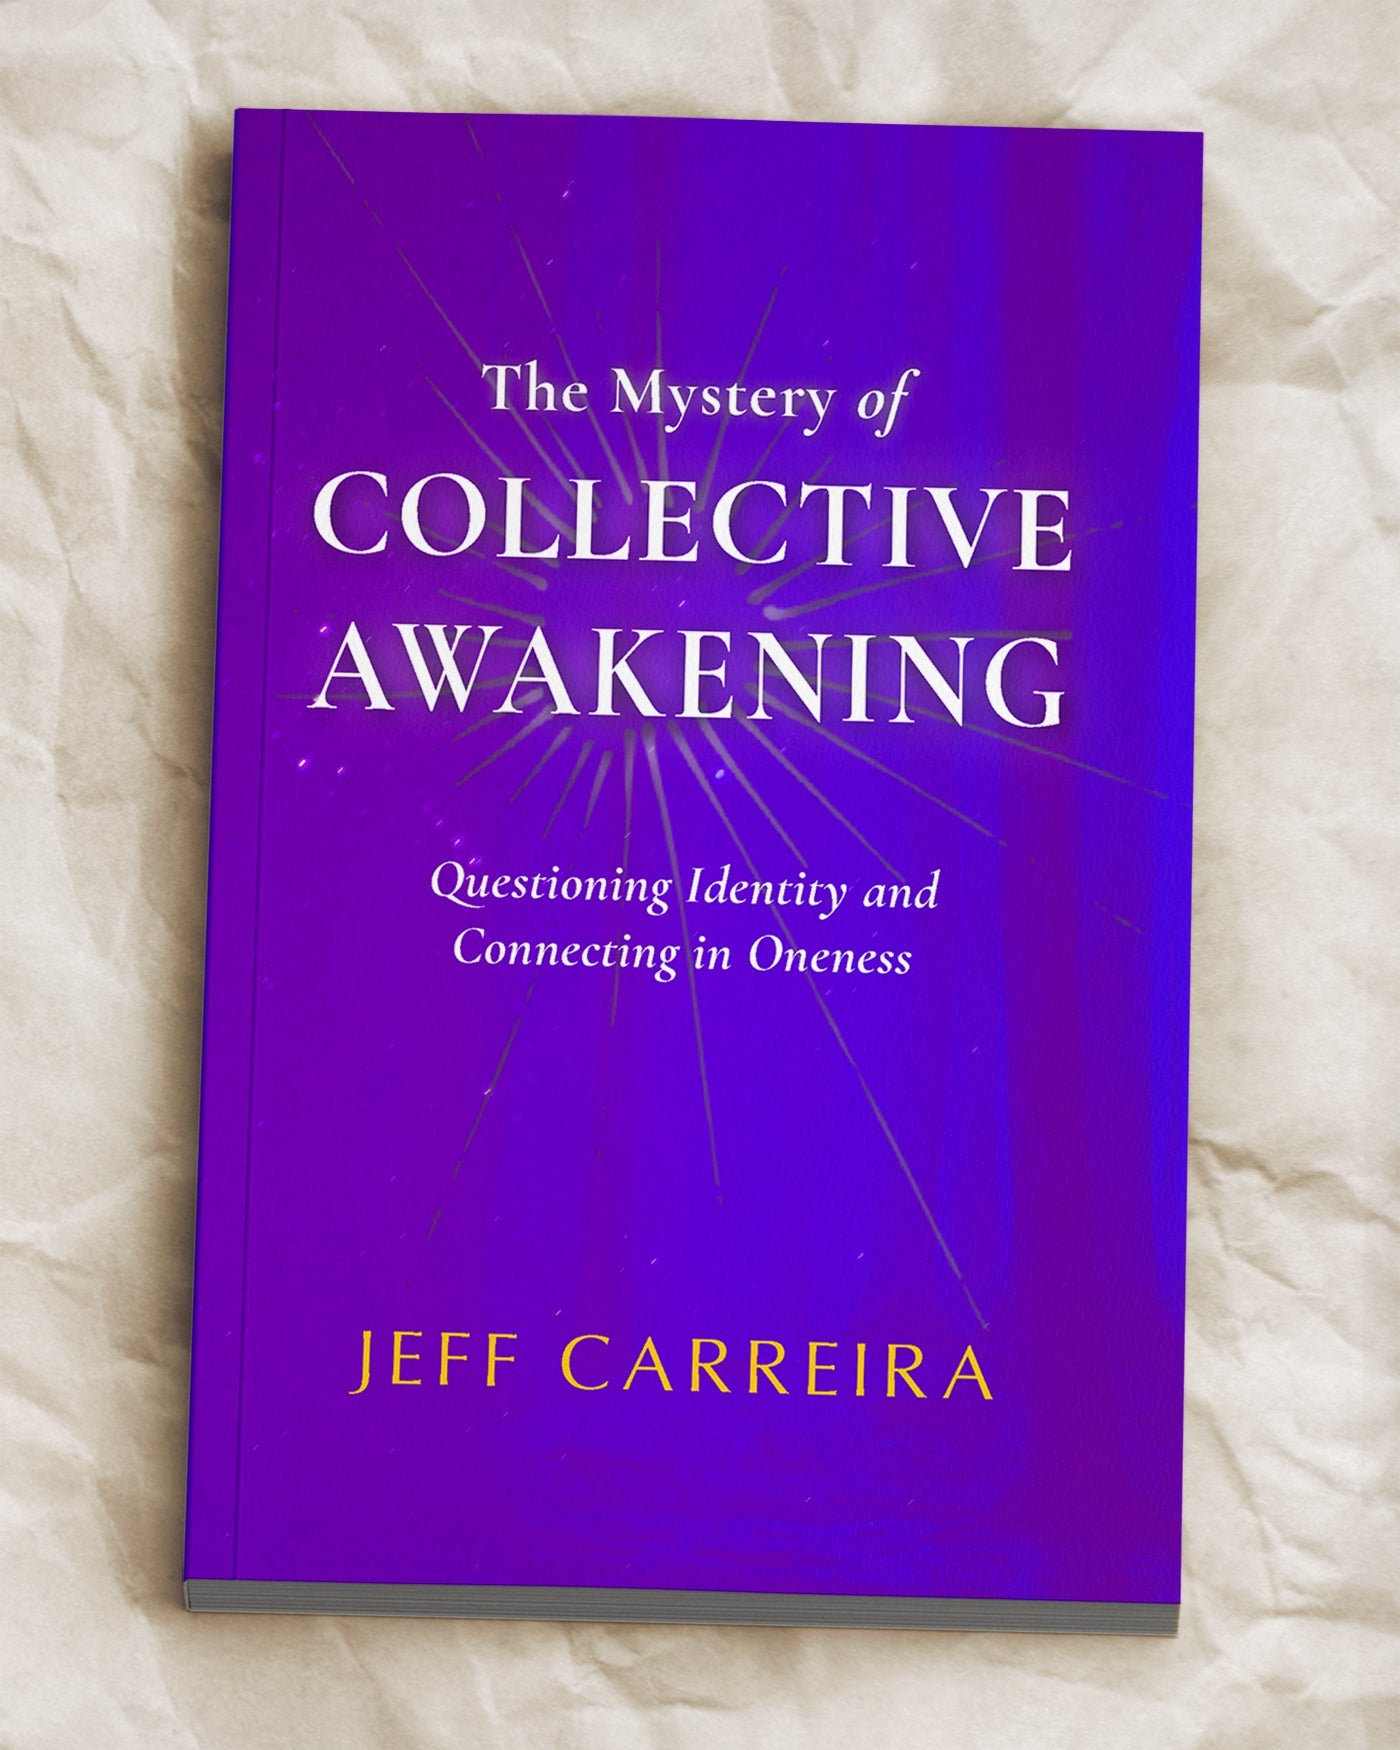 The Spiritual Teachings of Jeff Carreira Bundle [Paperback]